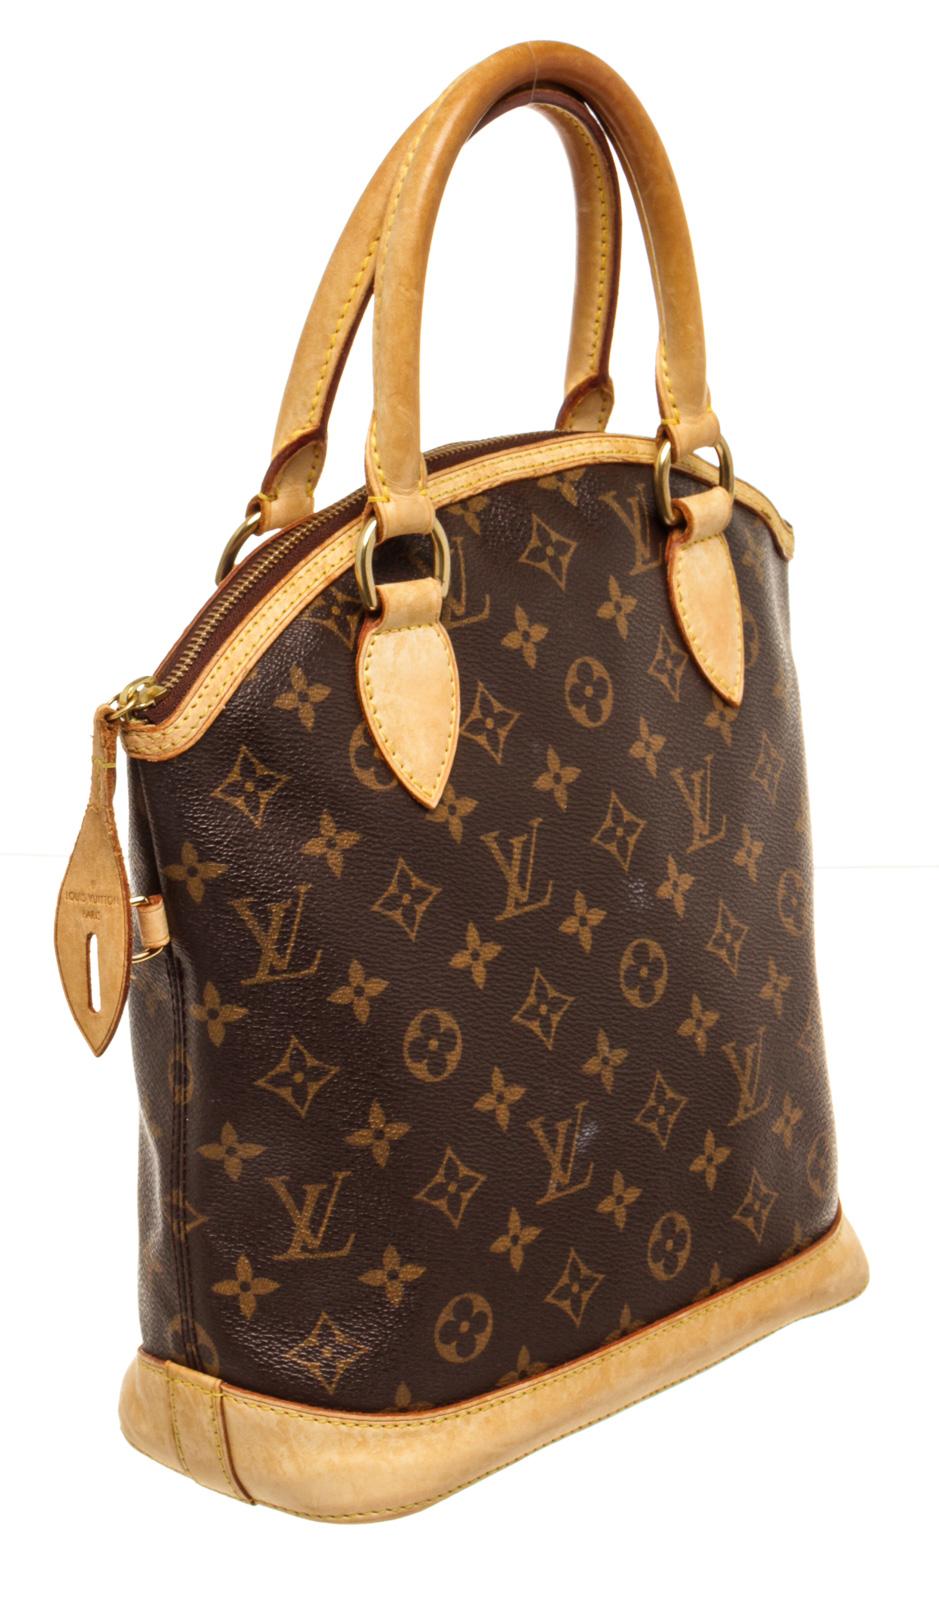 Louis Vuitton Brown Monogram Lockit Vertical Handbag with material monogram canvas, gold-tone hardware, trim tan vachetta leather, interior slip pocket, dual top handle and zipper closure.

440045MSC